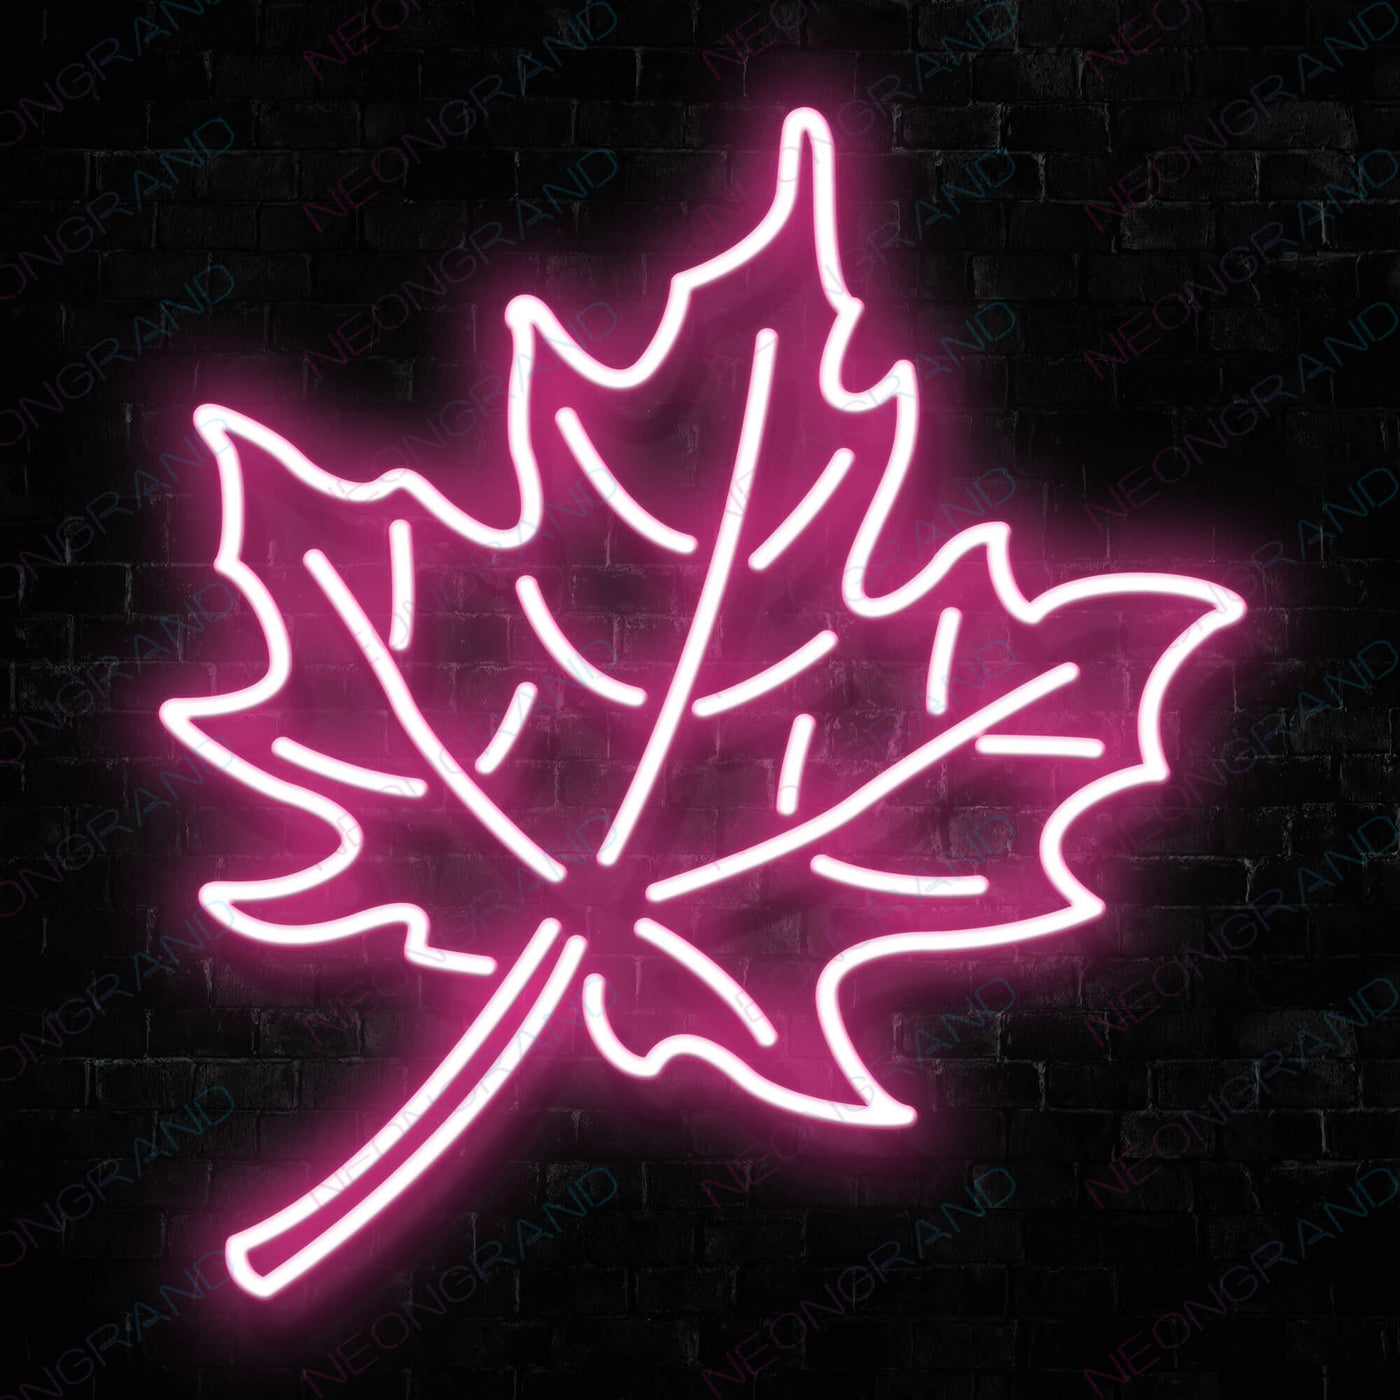 Aesthetic Neon Leaves Sign Led Light pink